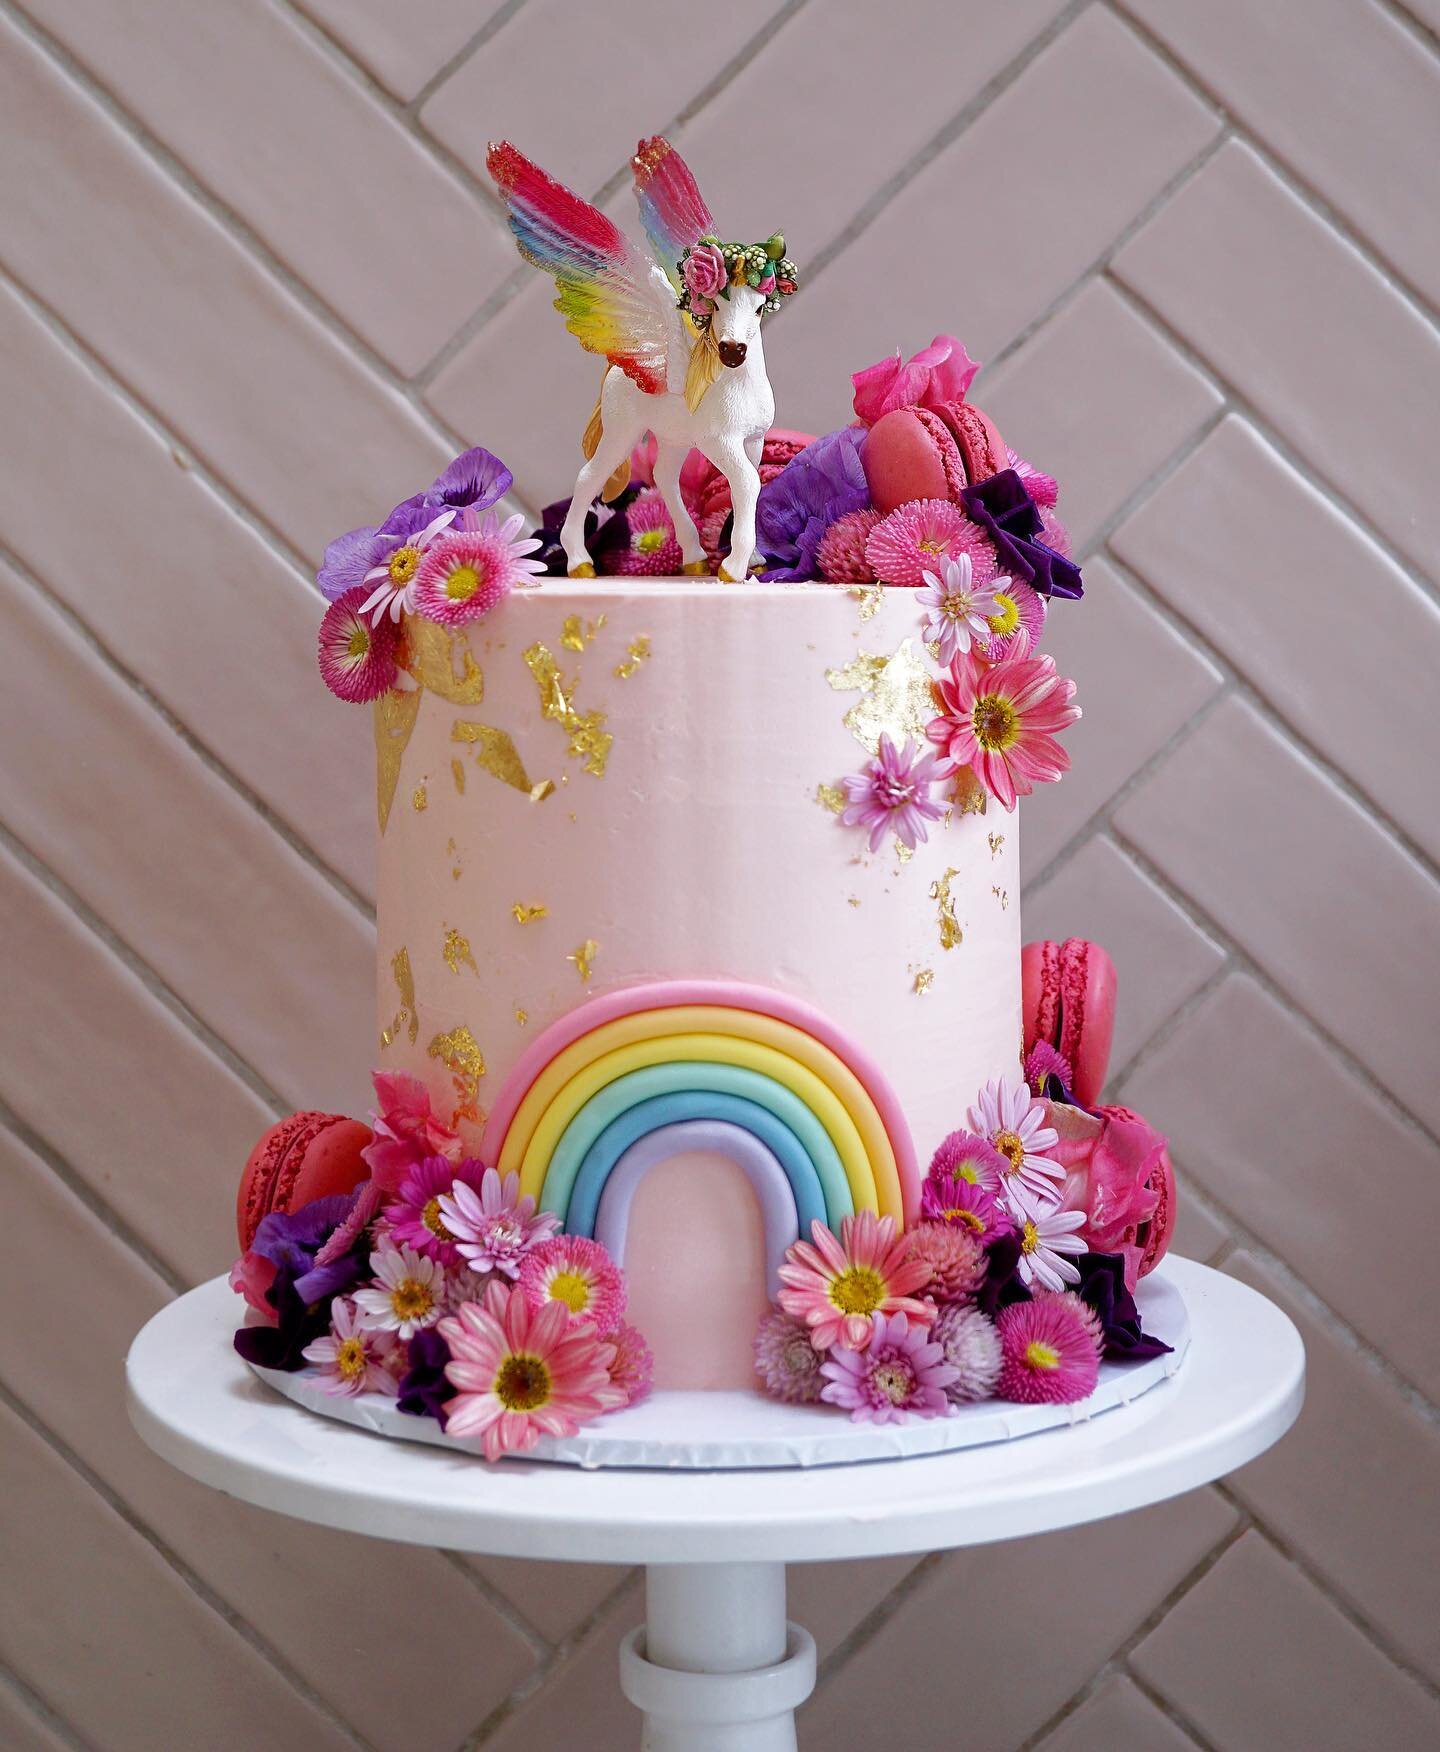 🌈RAINBOW UNICORN🦄

The dreamiest of little girl cakes! 

Unicorn - @bowbeaus 
Edible florals - @nurturedinnorfolk 

birthdaycake #pastelcake #pinkcake #buttercream #dripcake #cake #cakemaker #cakedecorating #instacake #instacakes #baker #bake #girl